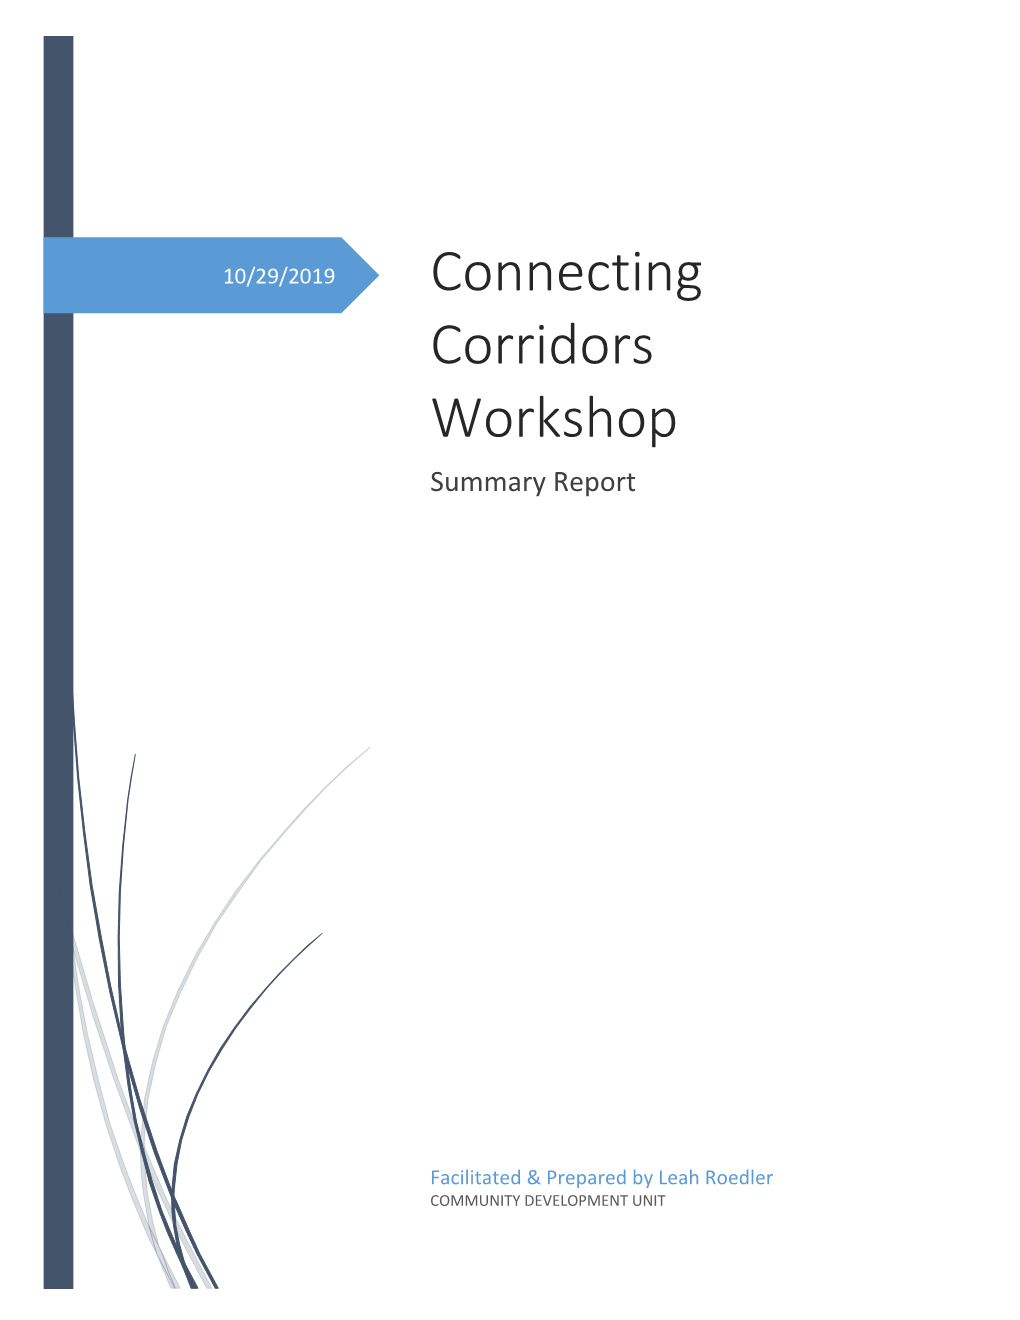 Connecting Corridors Workshop Summary Report